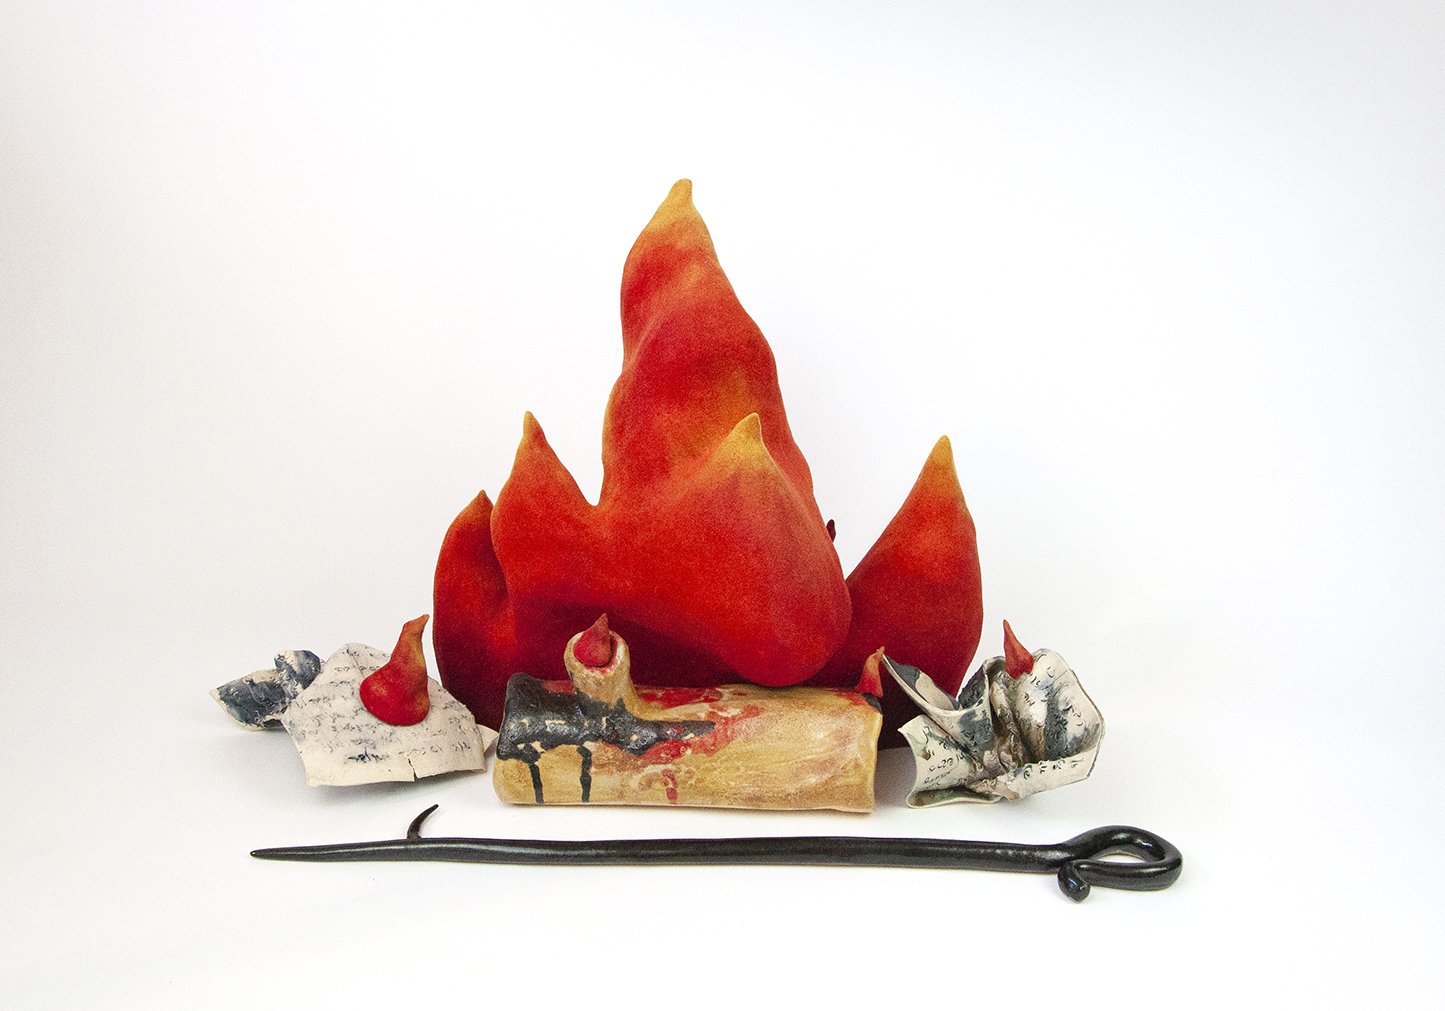  Hadar Pnina Kleiman “Let It All Burn in a Whisper” / 2020 / Ceramic, glaze, lava glaze, flock / 24" x 18" x 14" / $3,500 